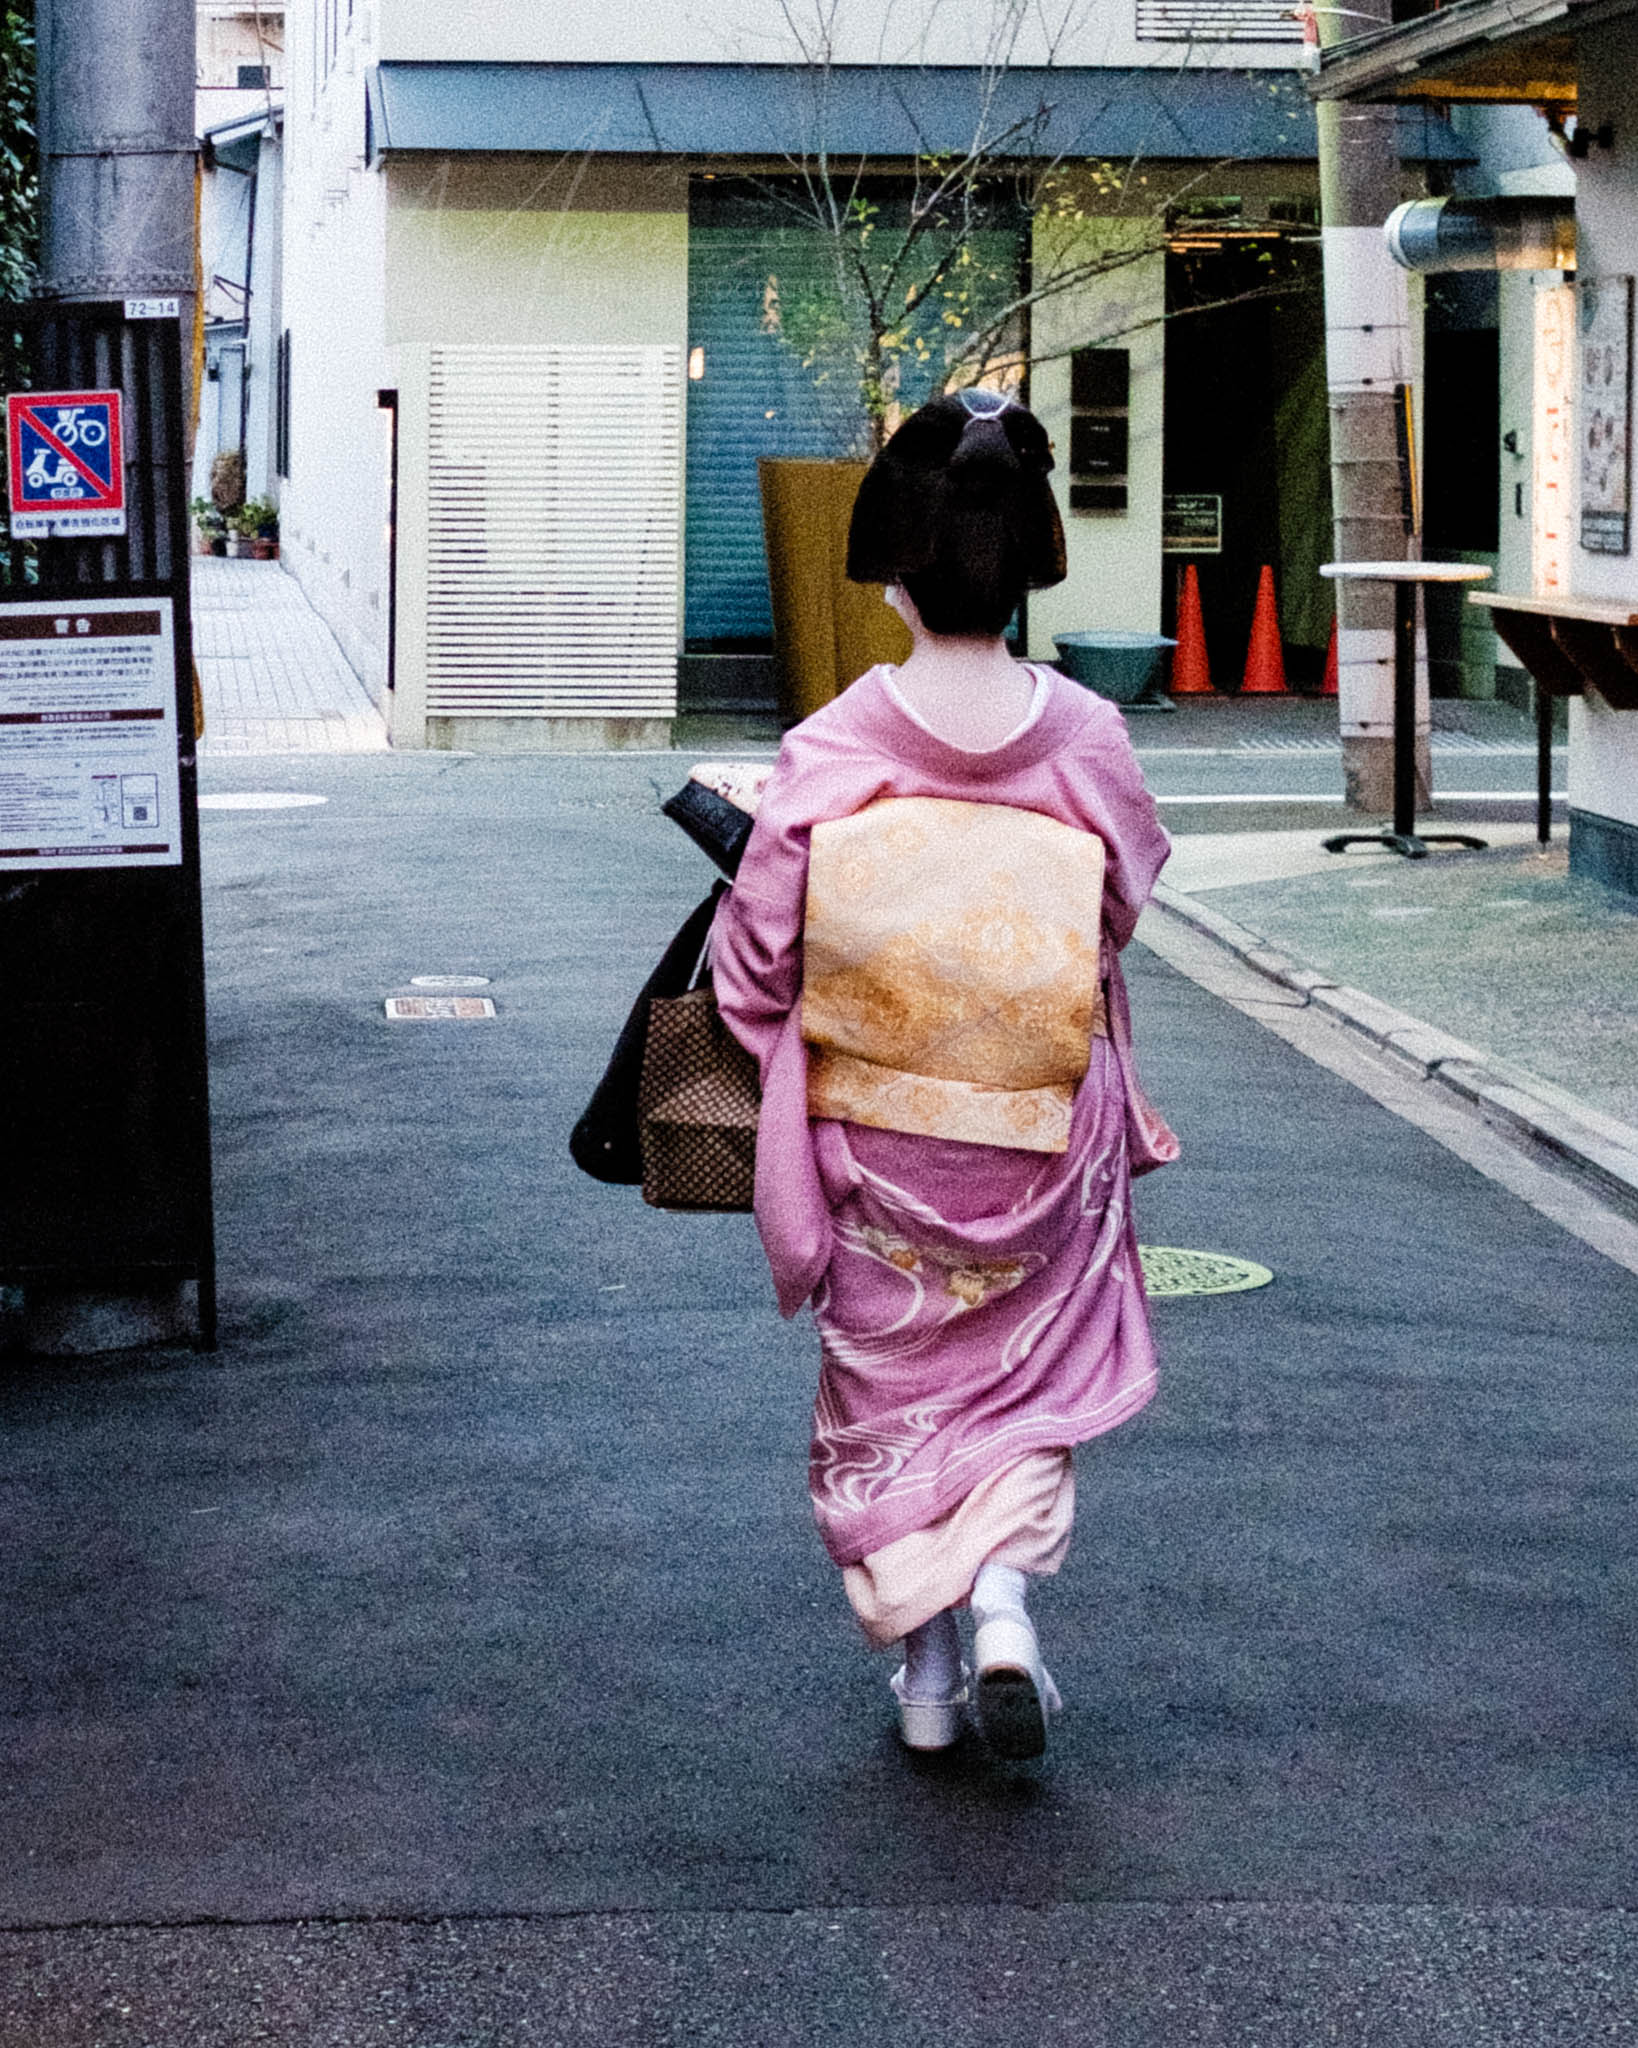 Geisha in vibrant pink kimono navigating modern urban Japanese street